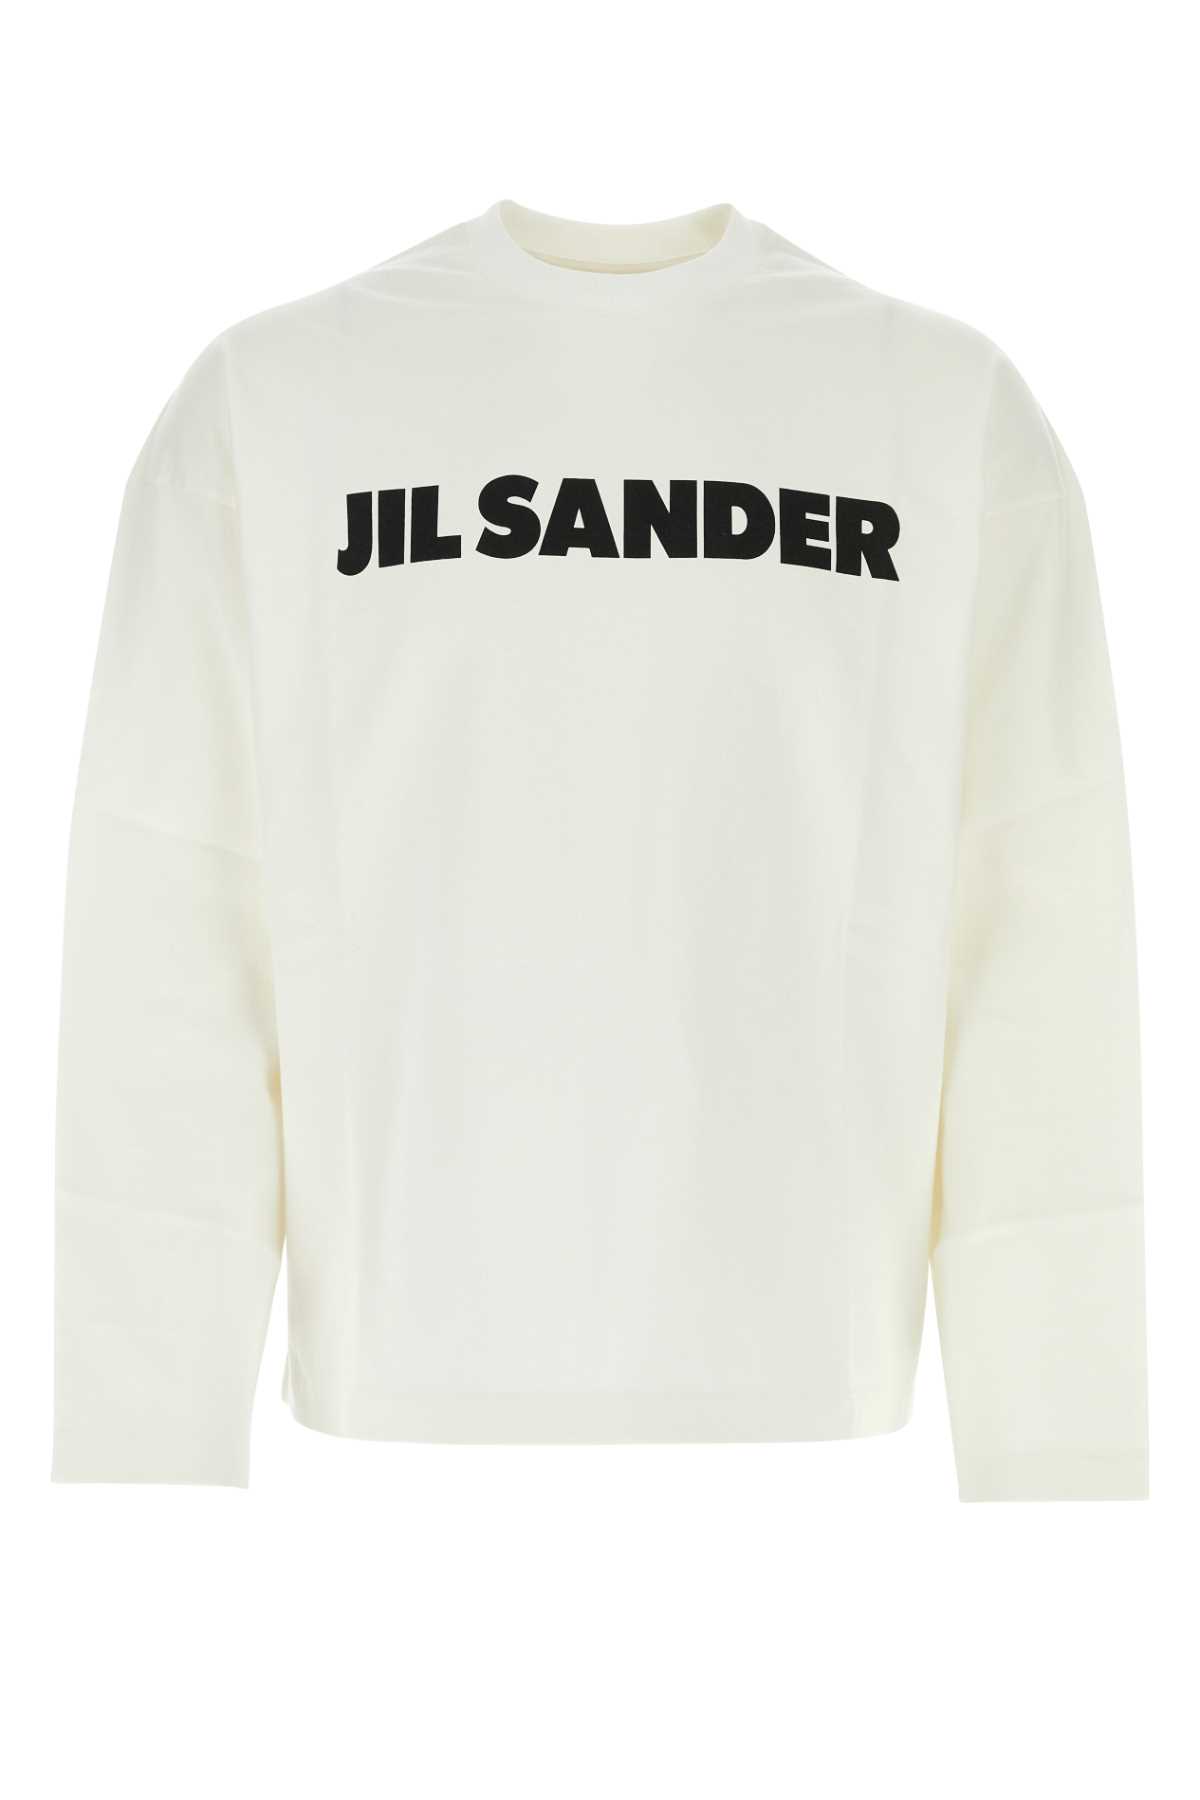 Jil Sander White Cotton T-shirt In Neutral